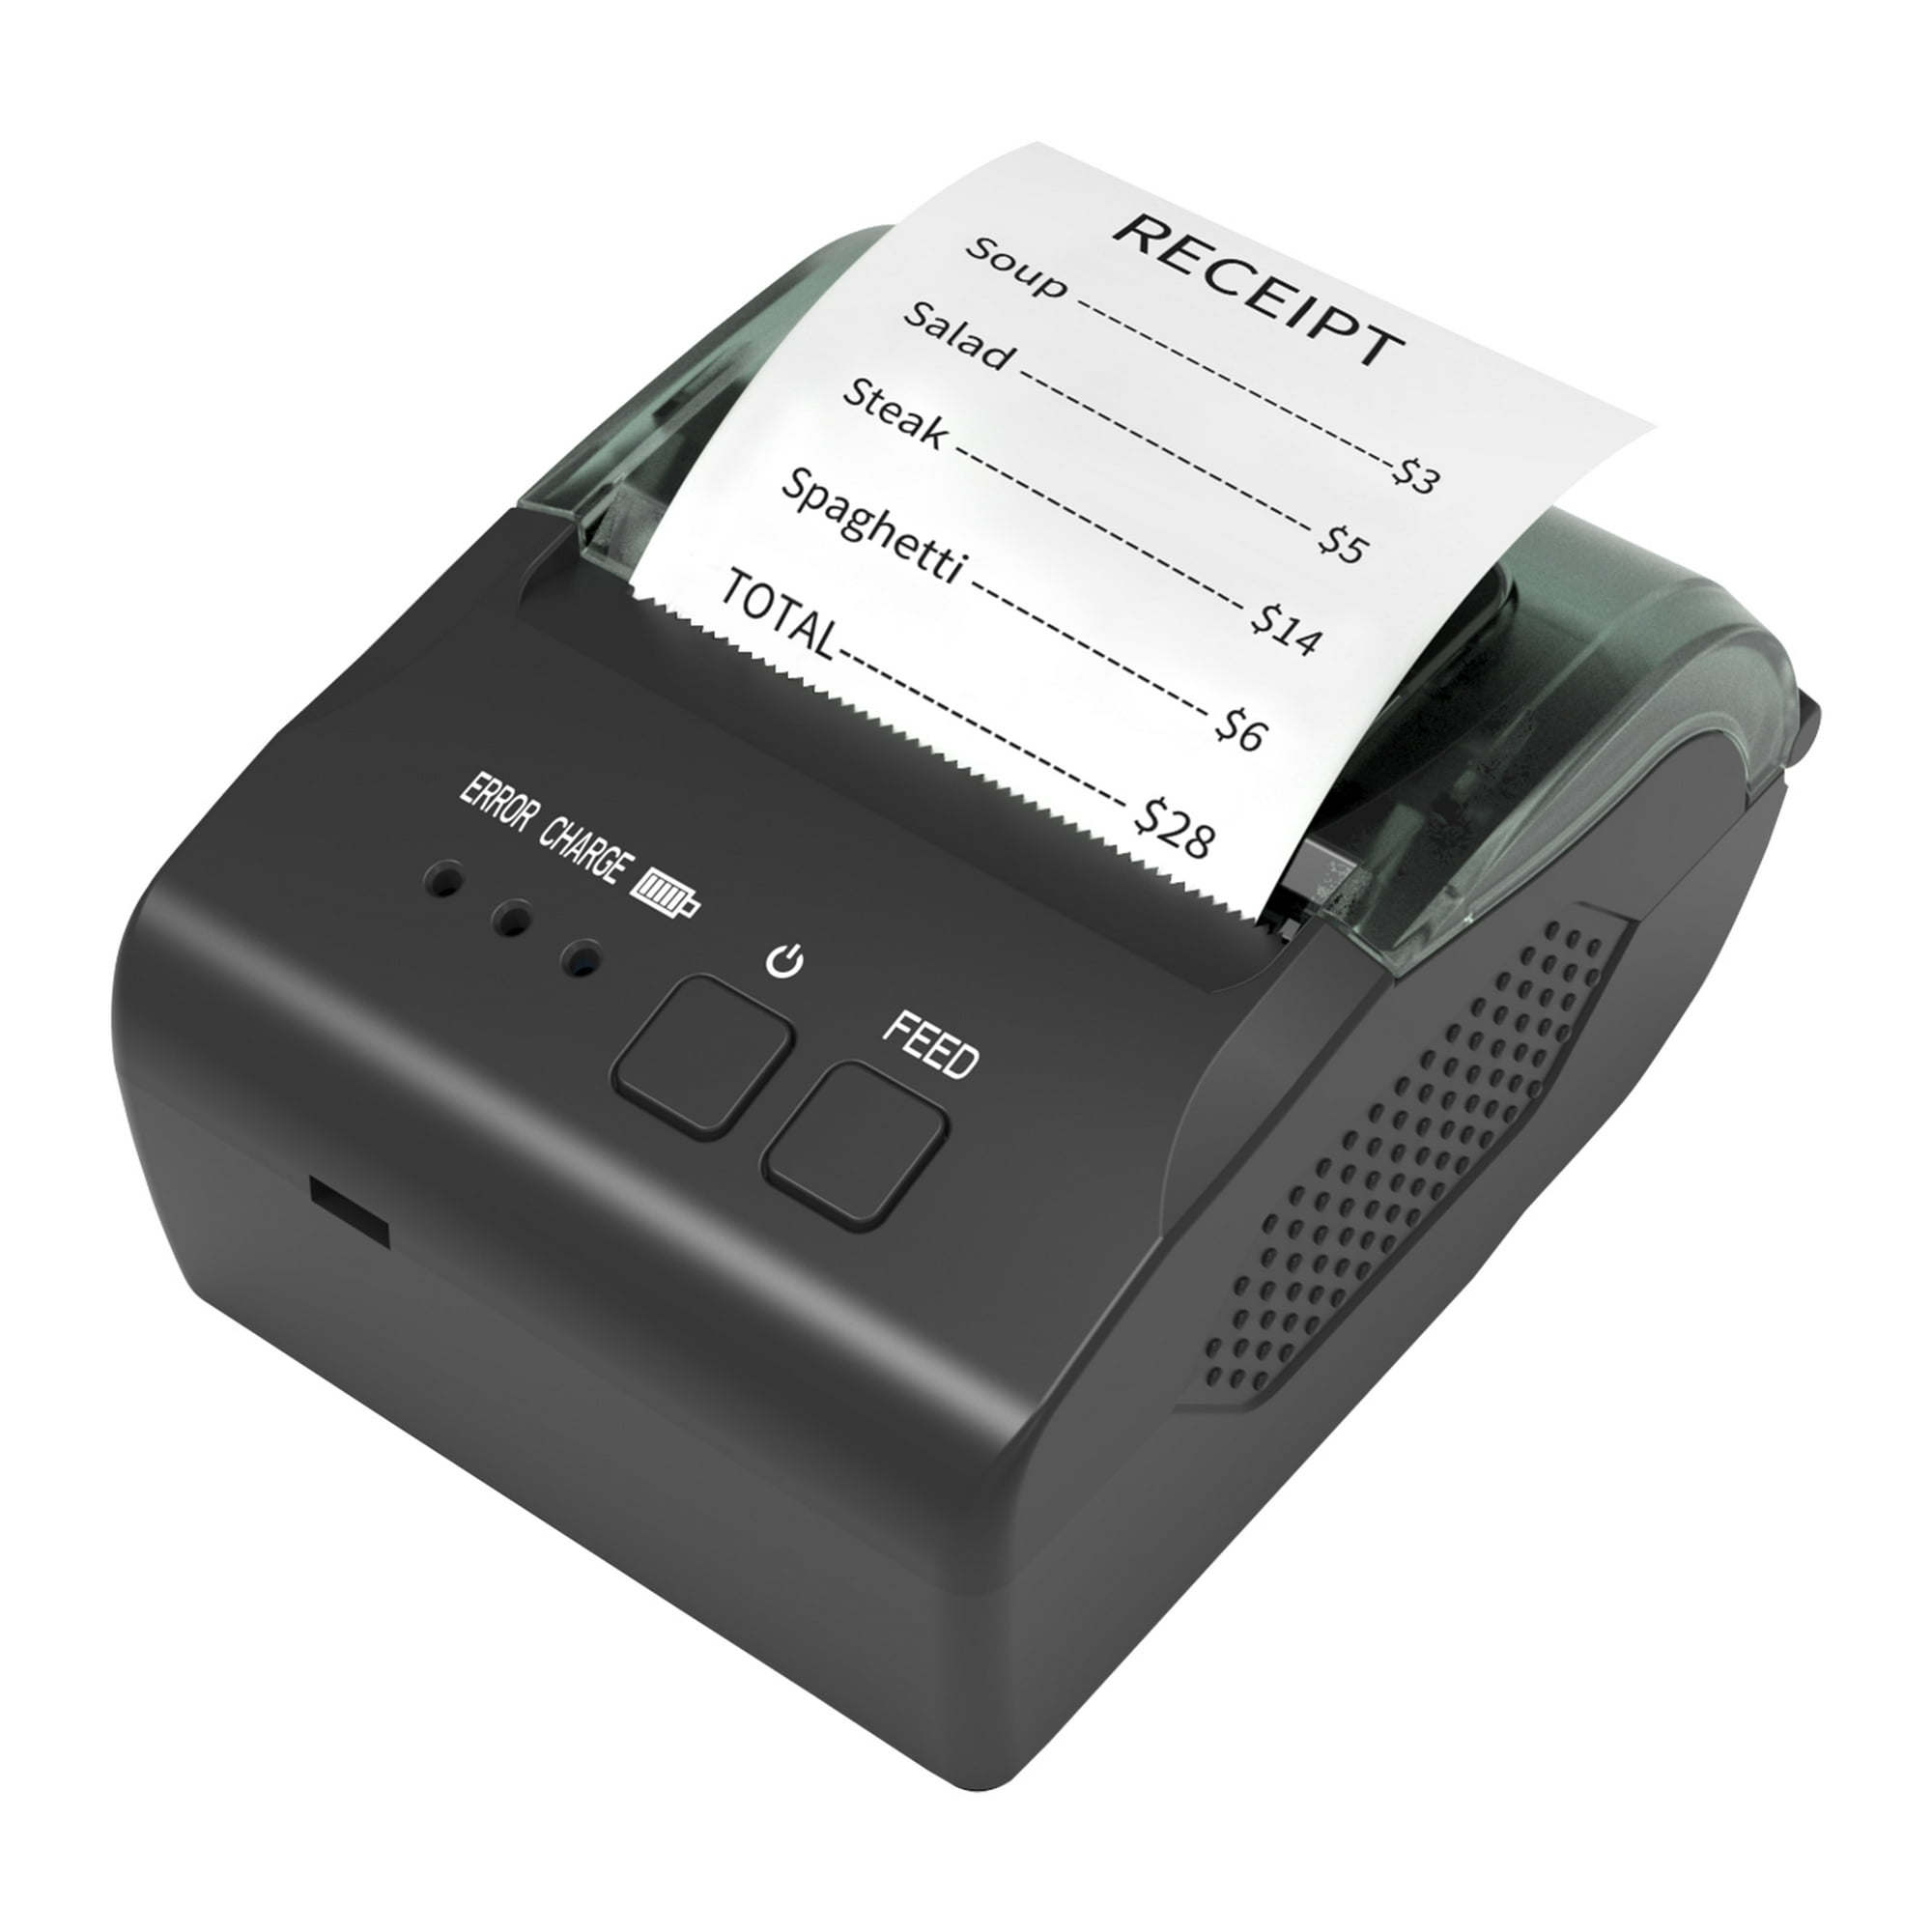  Mini impresora portátil, impresora térmica de bolsillo con 7  rollos de papel, impresora inteligente inalámbrica Bluetooth para fotos,  fotos, oficina, recibos, notas, código QR, impresión sin tinta con  aplicación iOS y